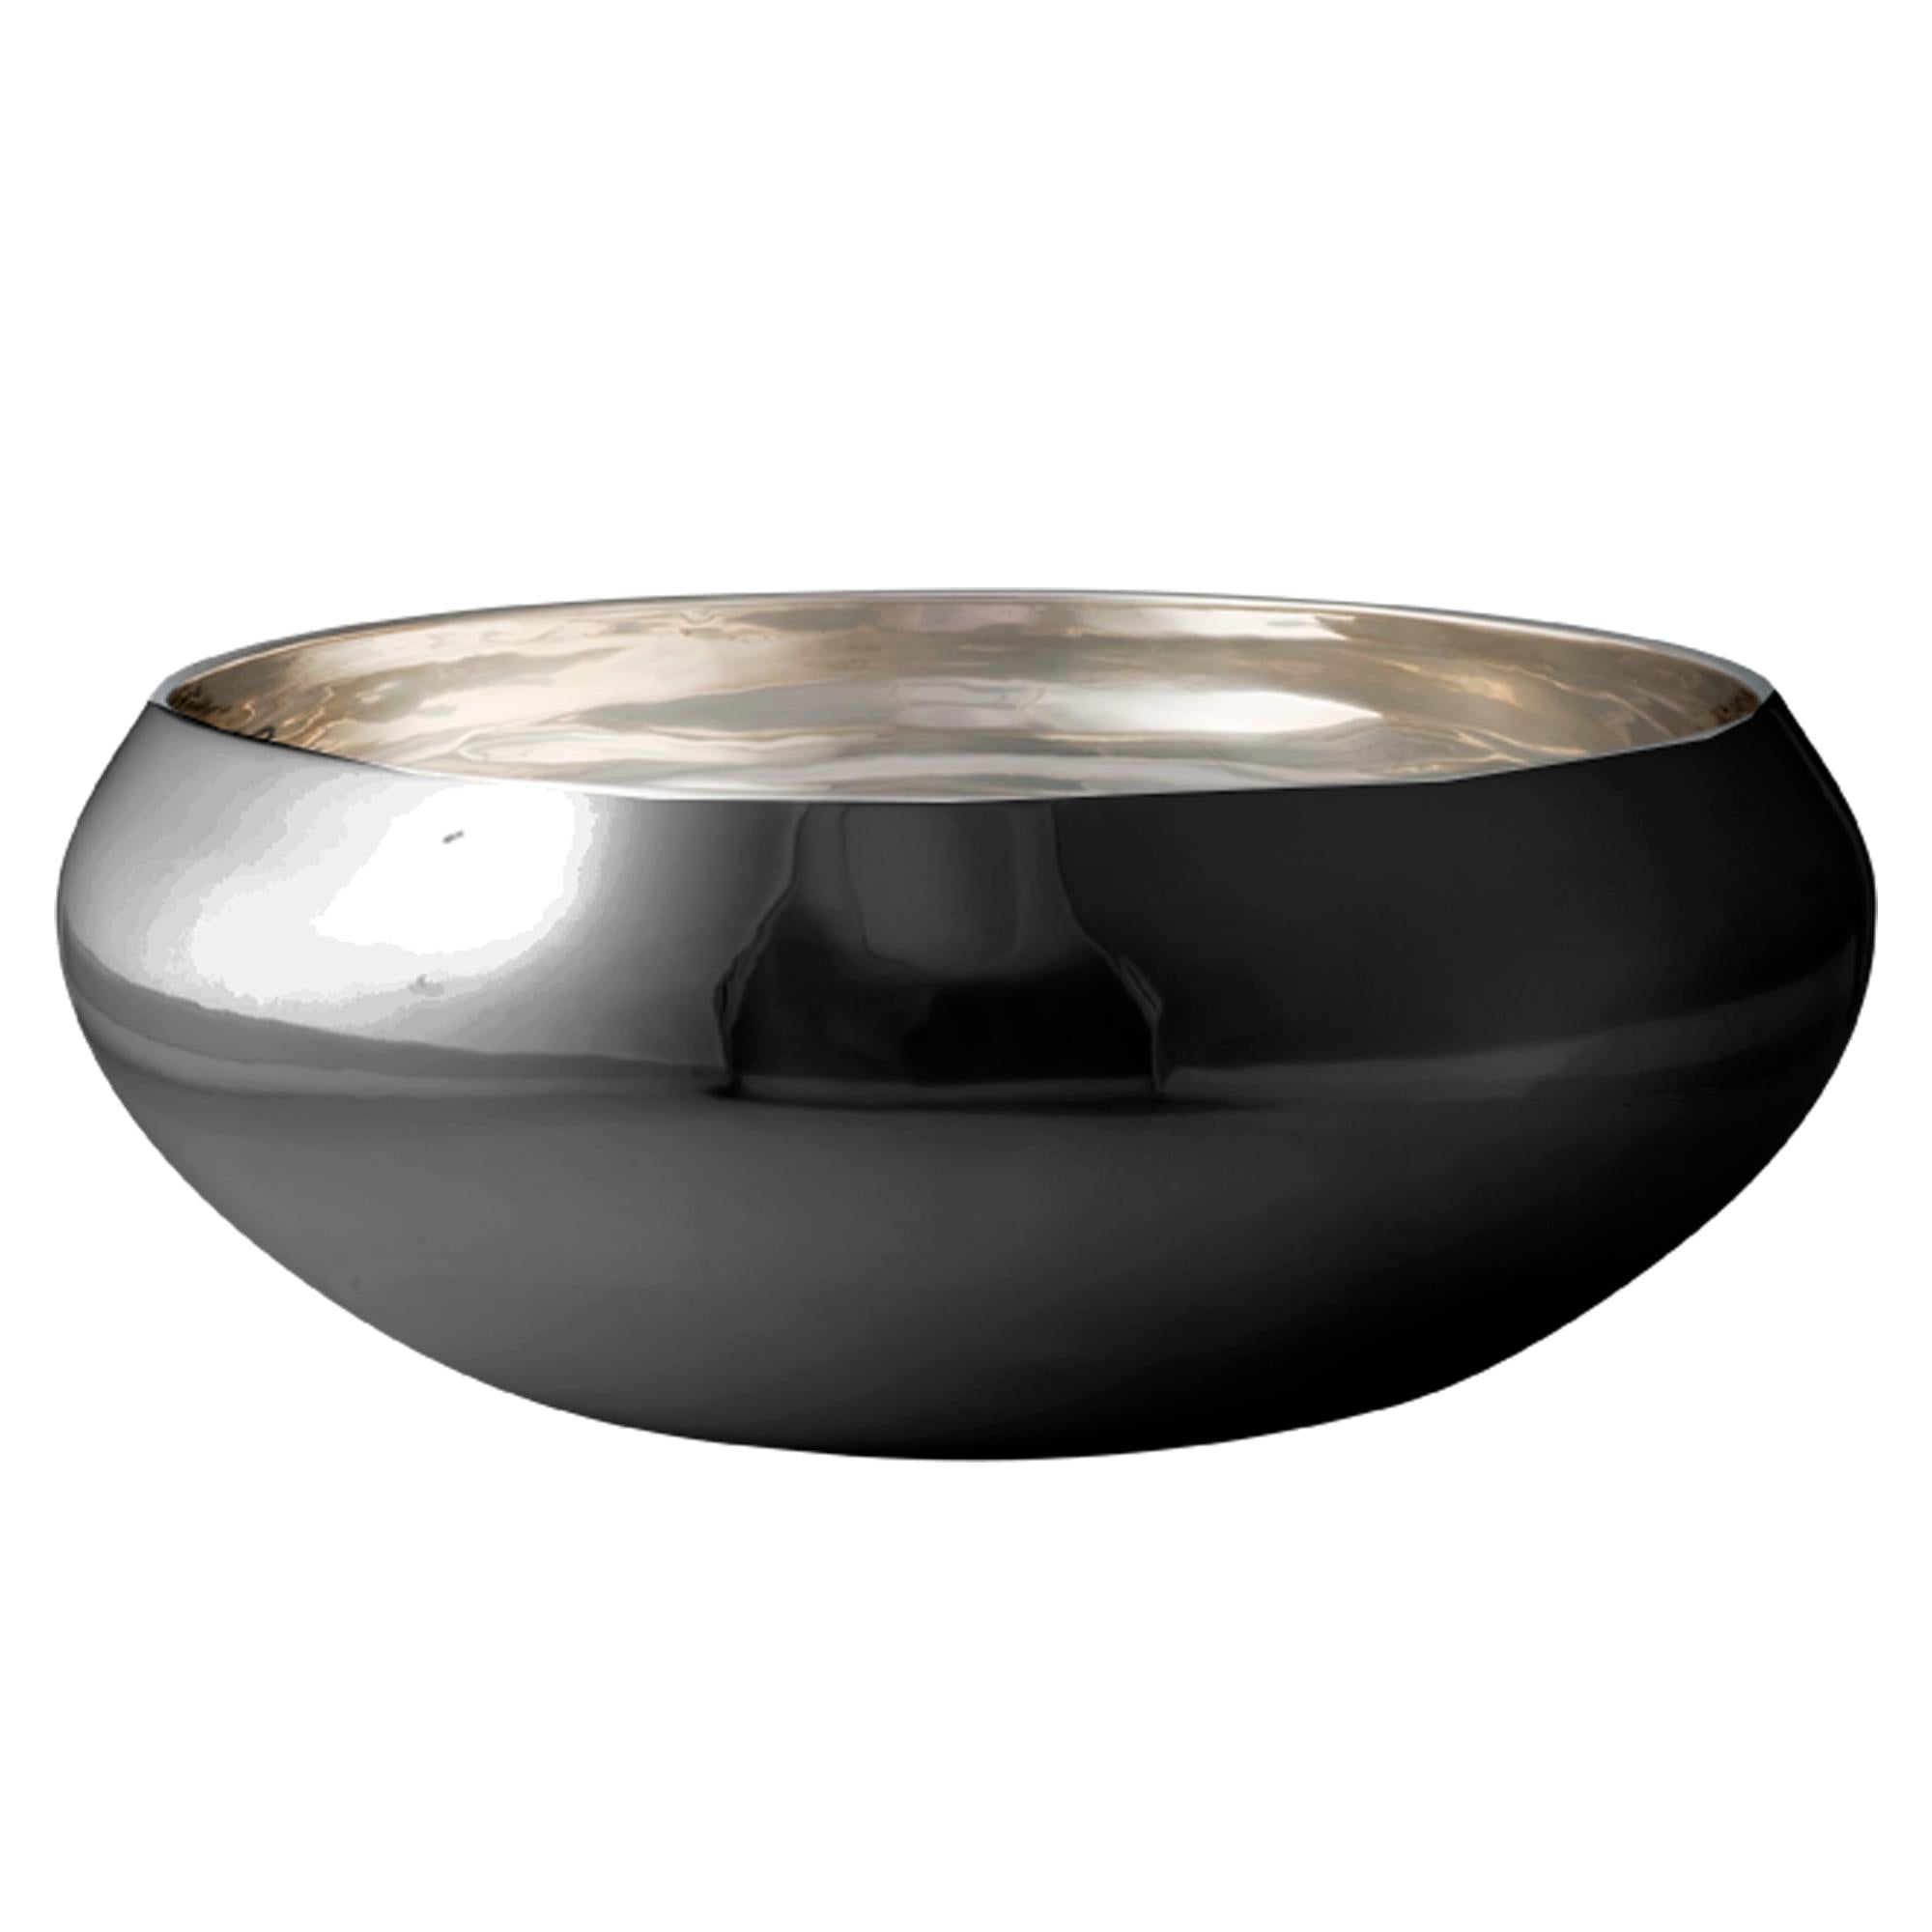 Kay Bojesen Nest Bowl hecho de acero negro, grande